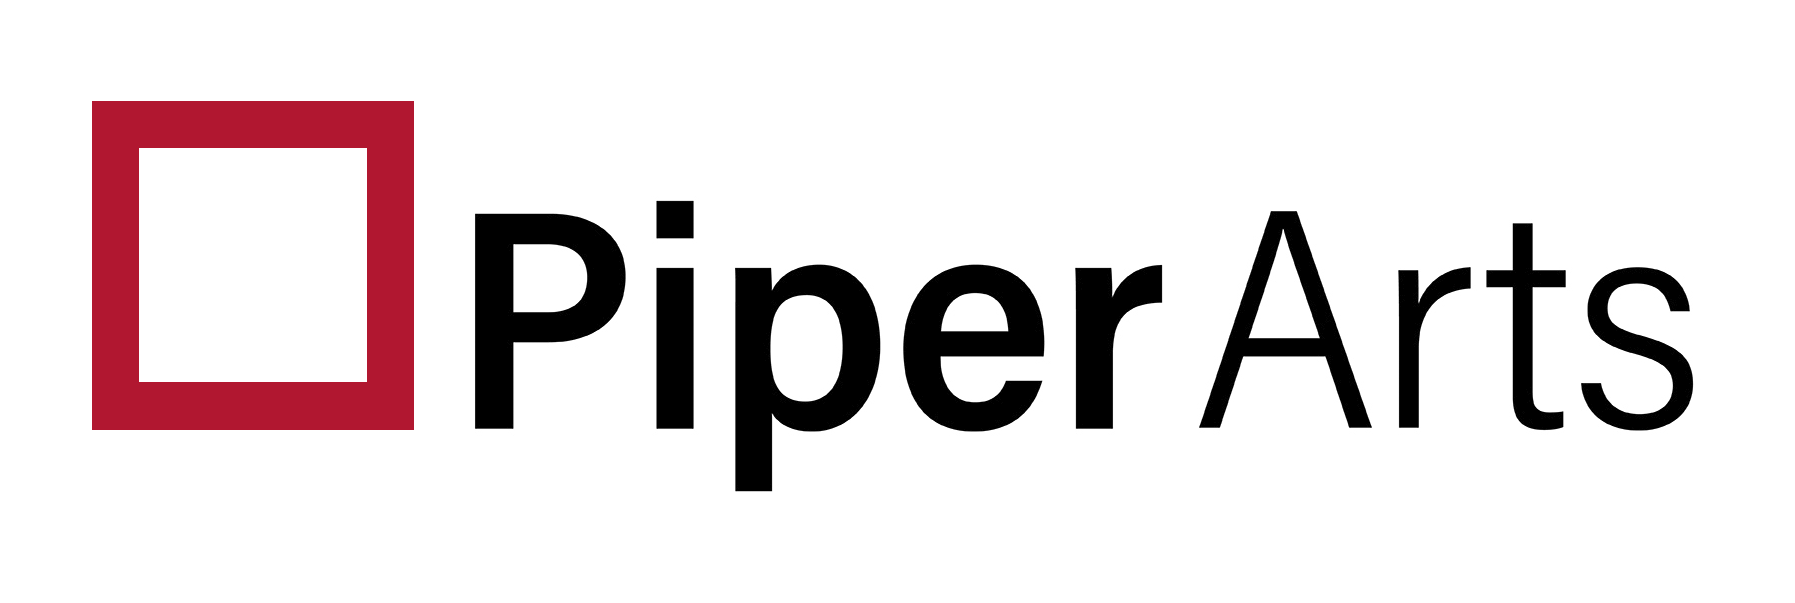 Piper Arts logo